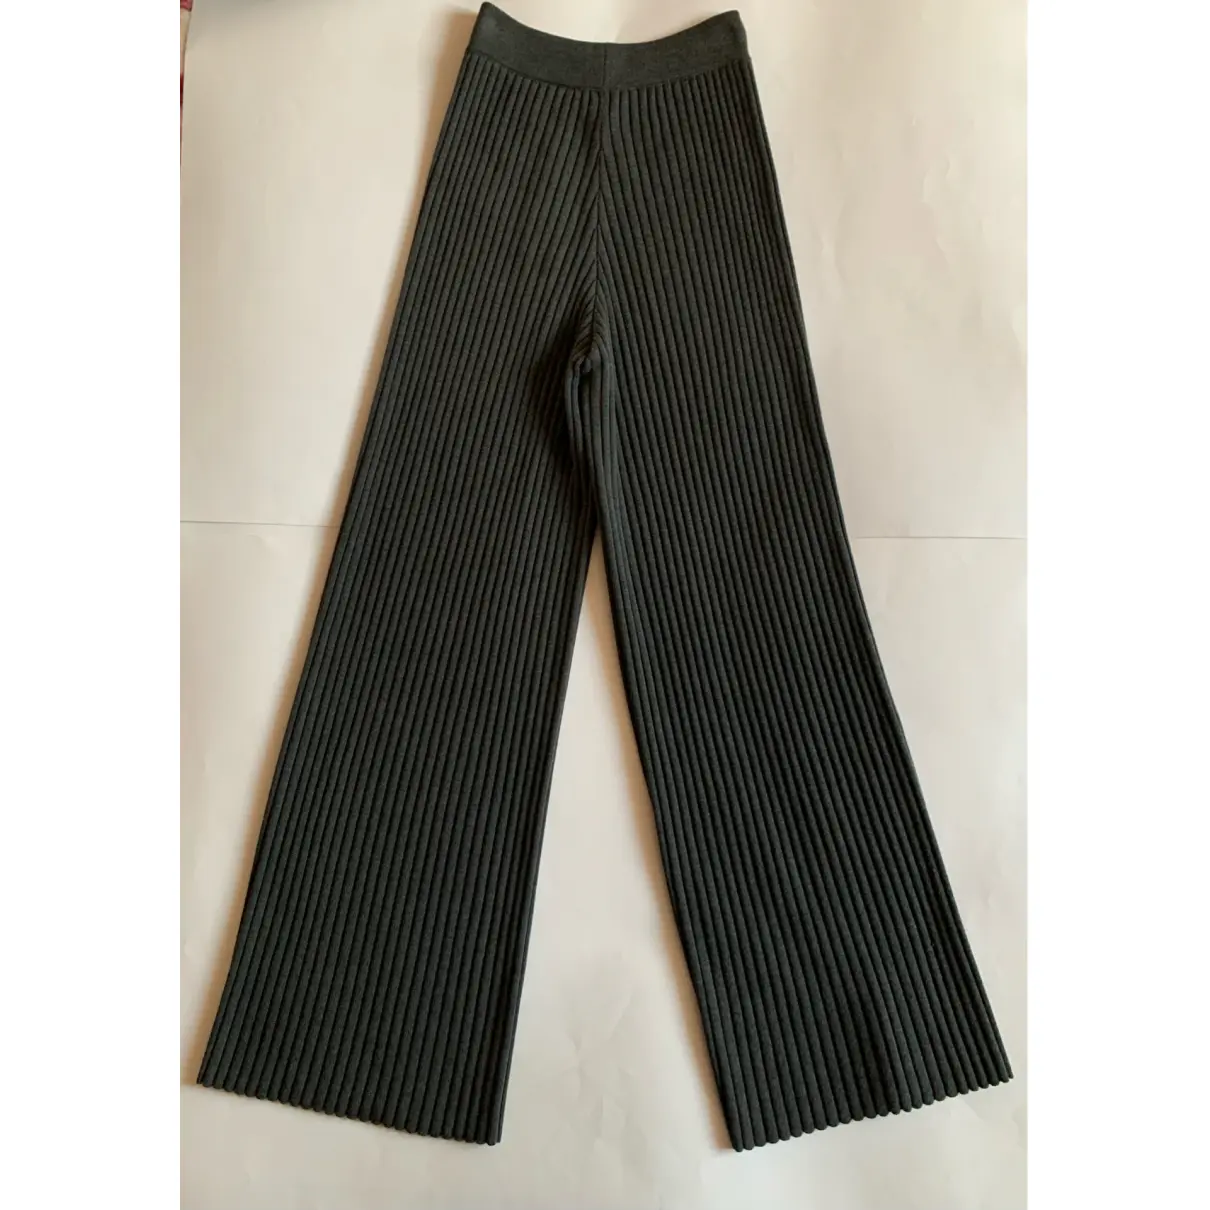 Buy Stella McCartney Wool large pants online